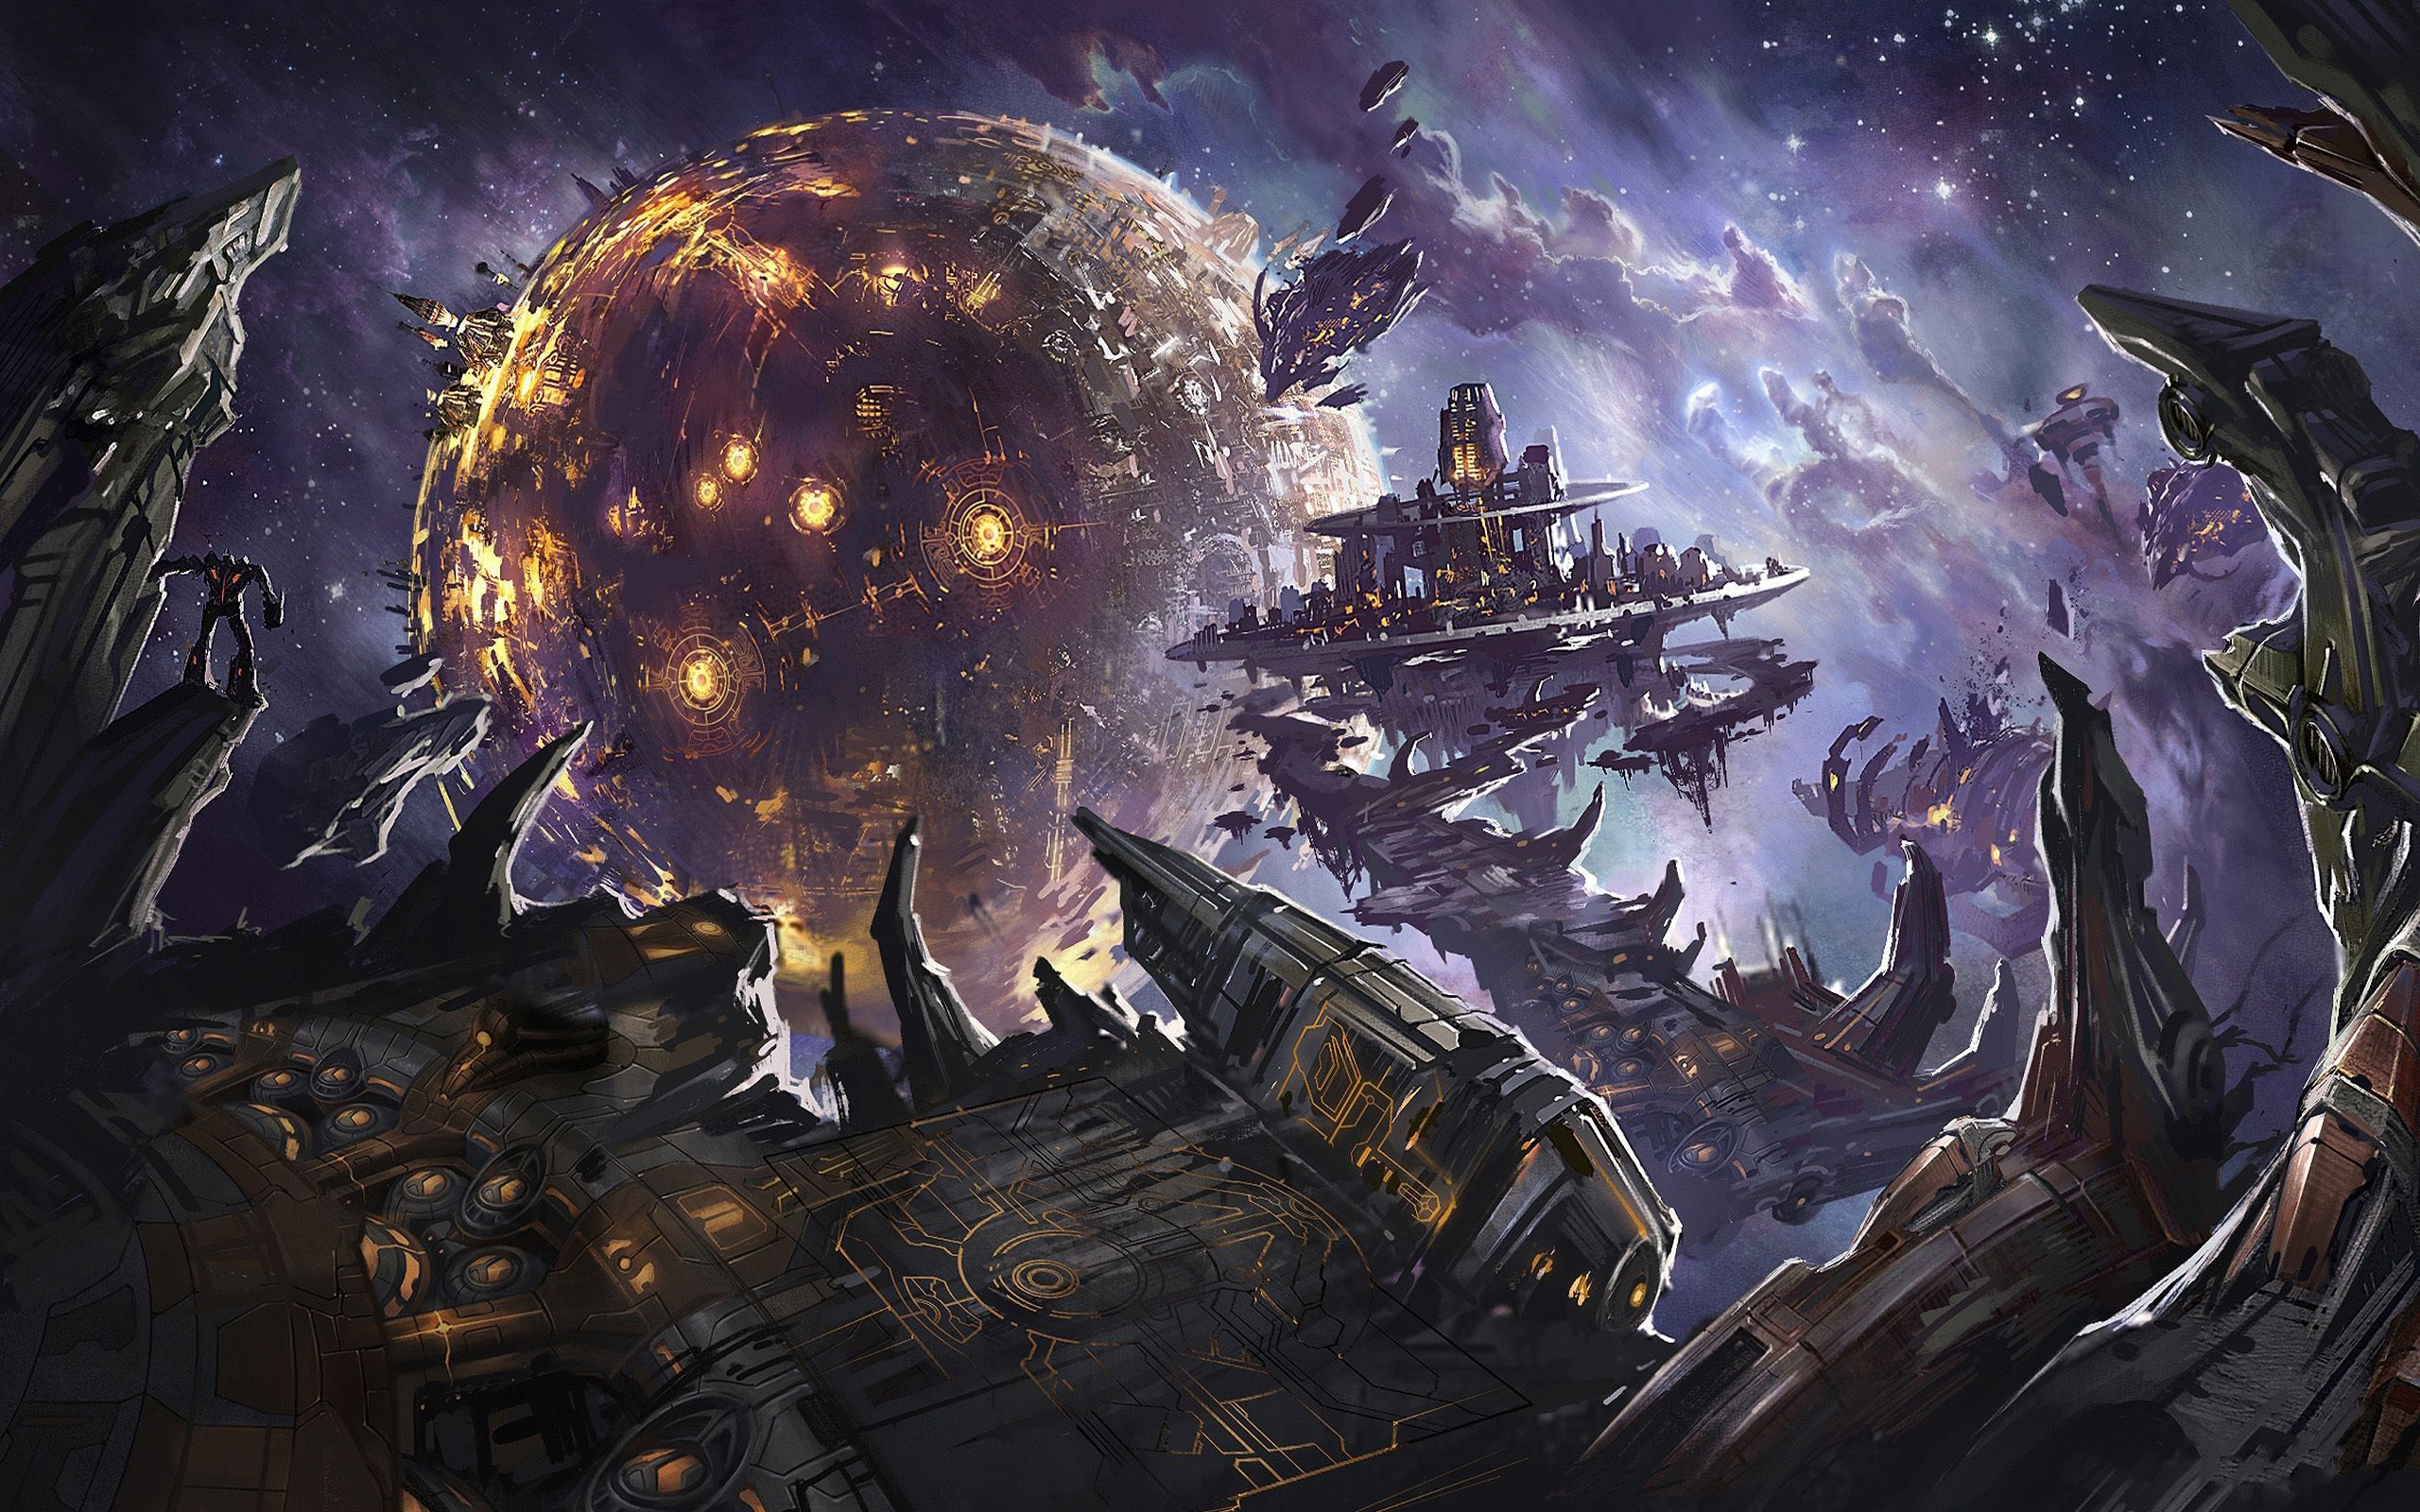 Transformers War for Cybertron Wallpaper Background. Concept art gallery, Spaceship art, Fantasy art